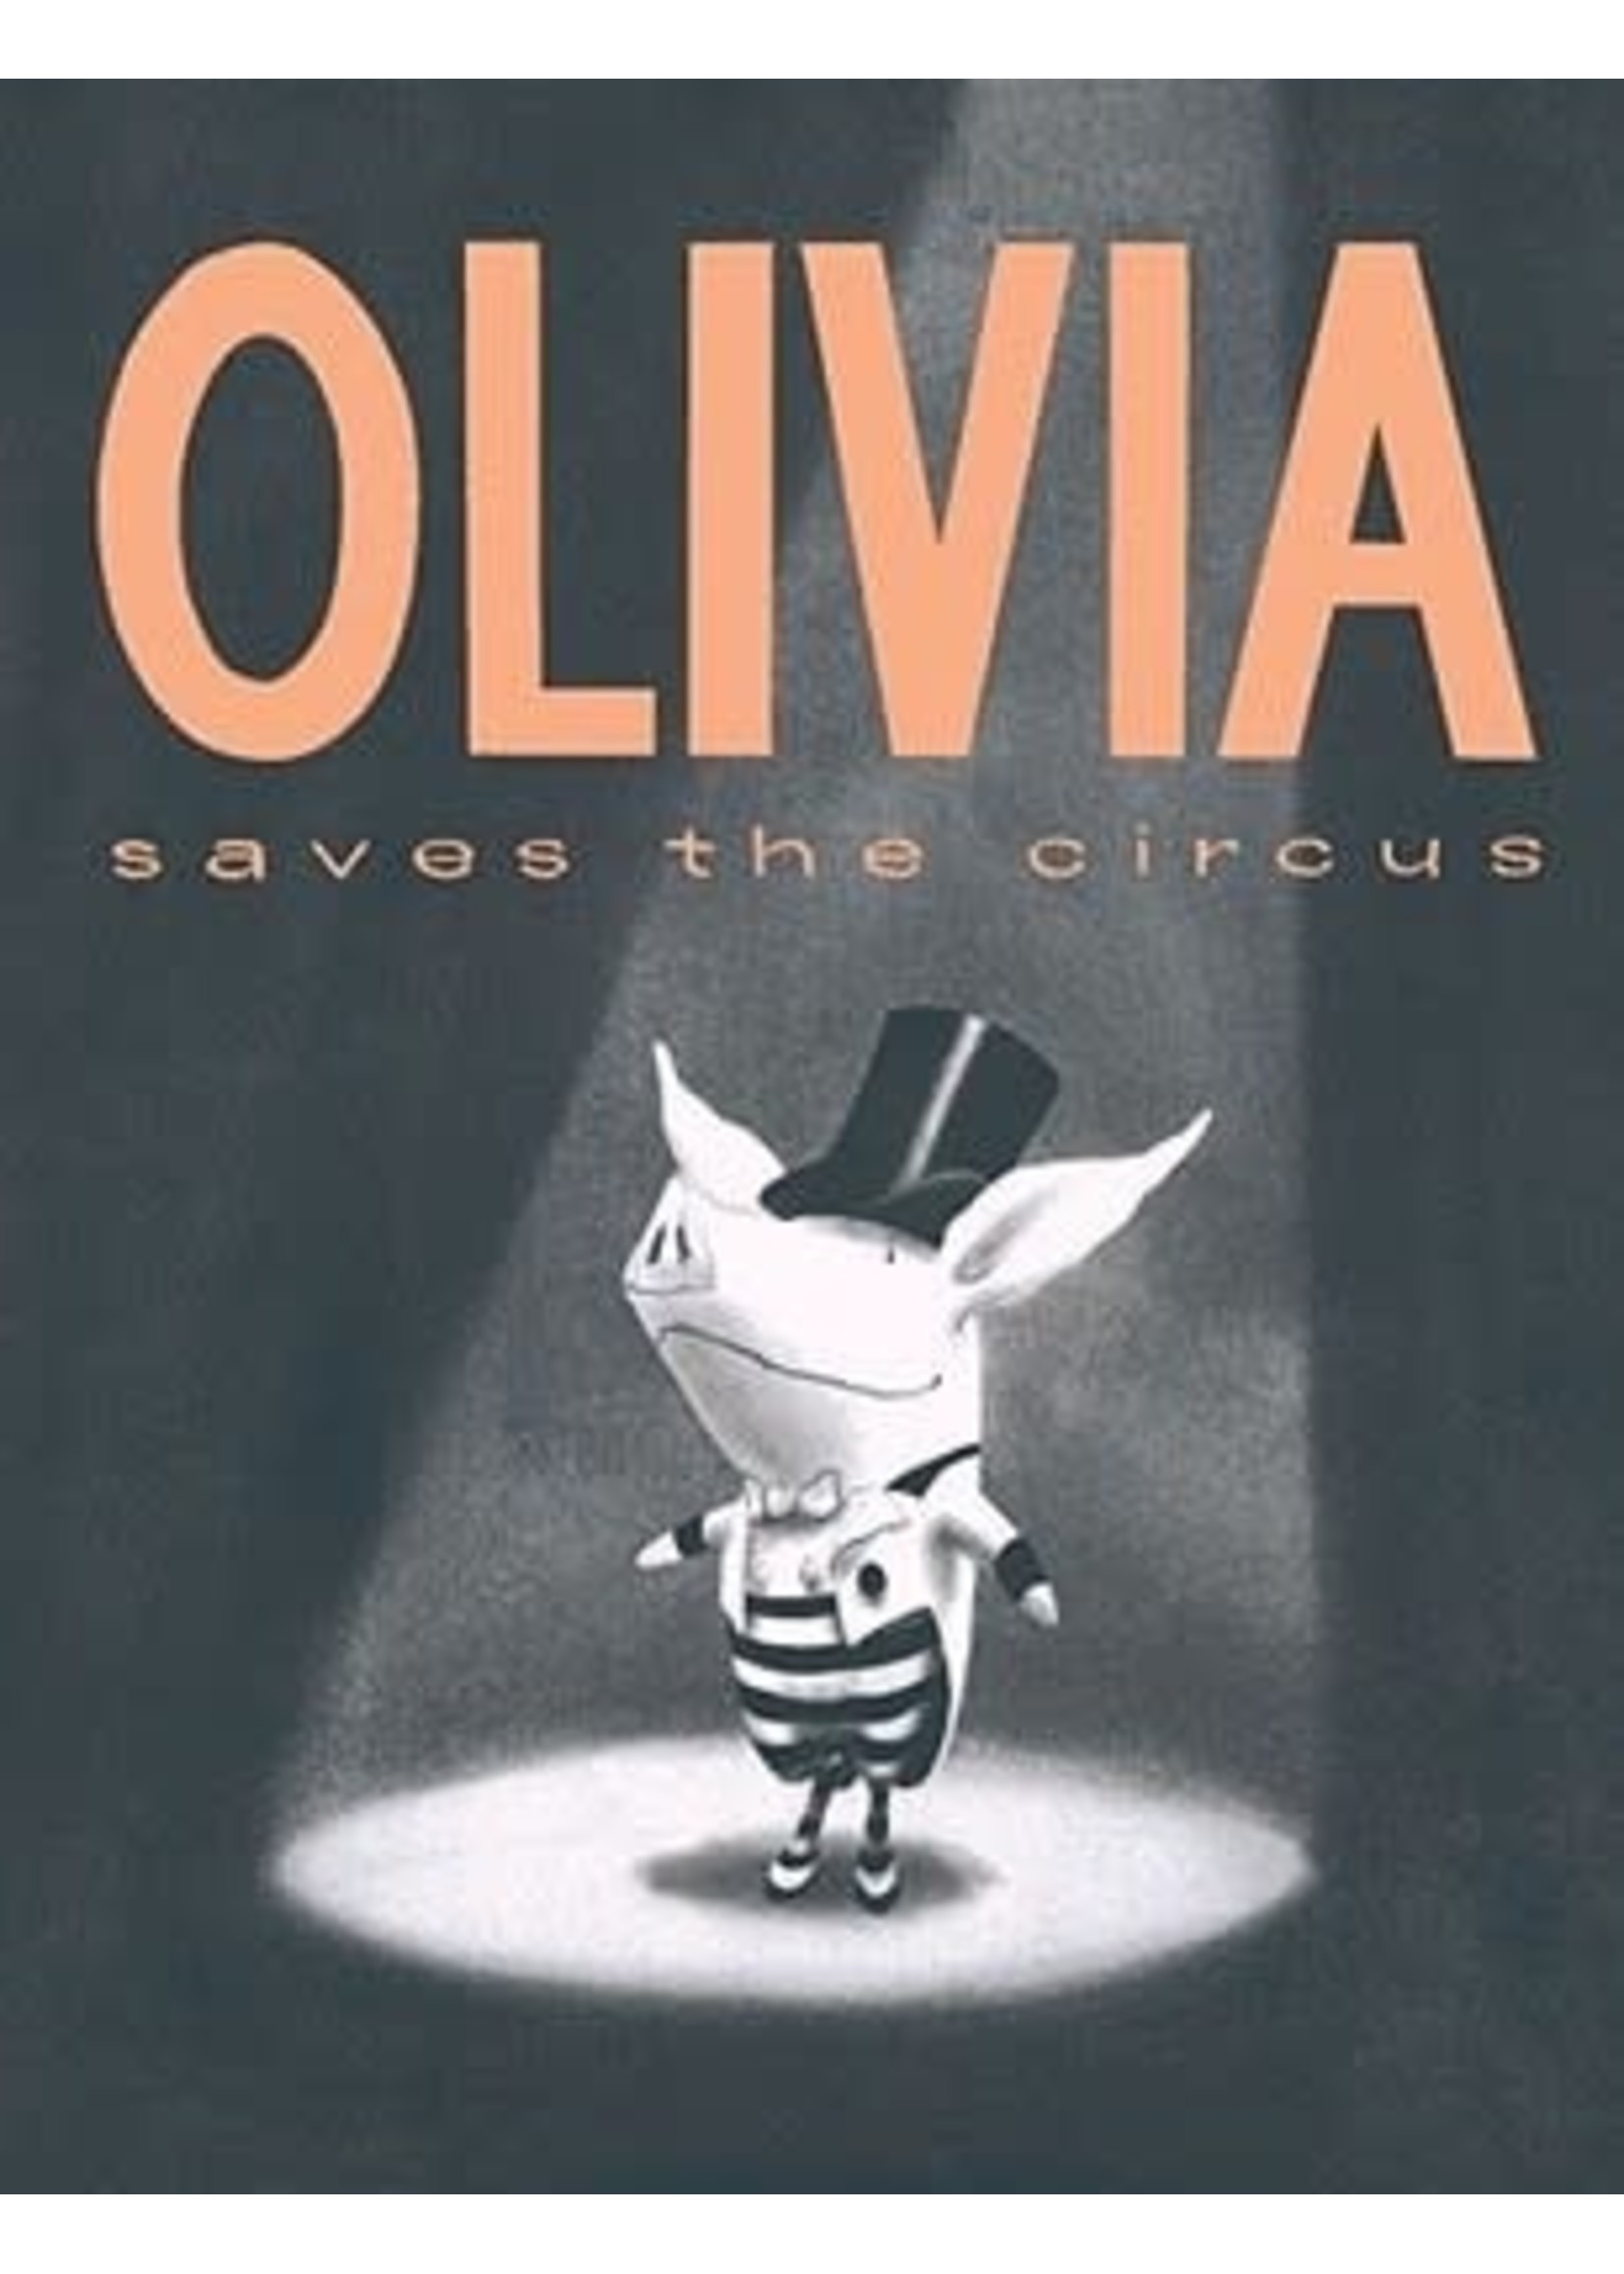 Olivia Saves the Circus (Olivia #2) by Ian Falconer